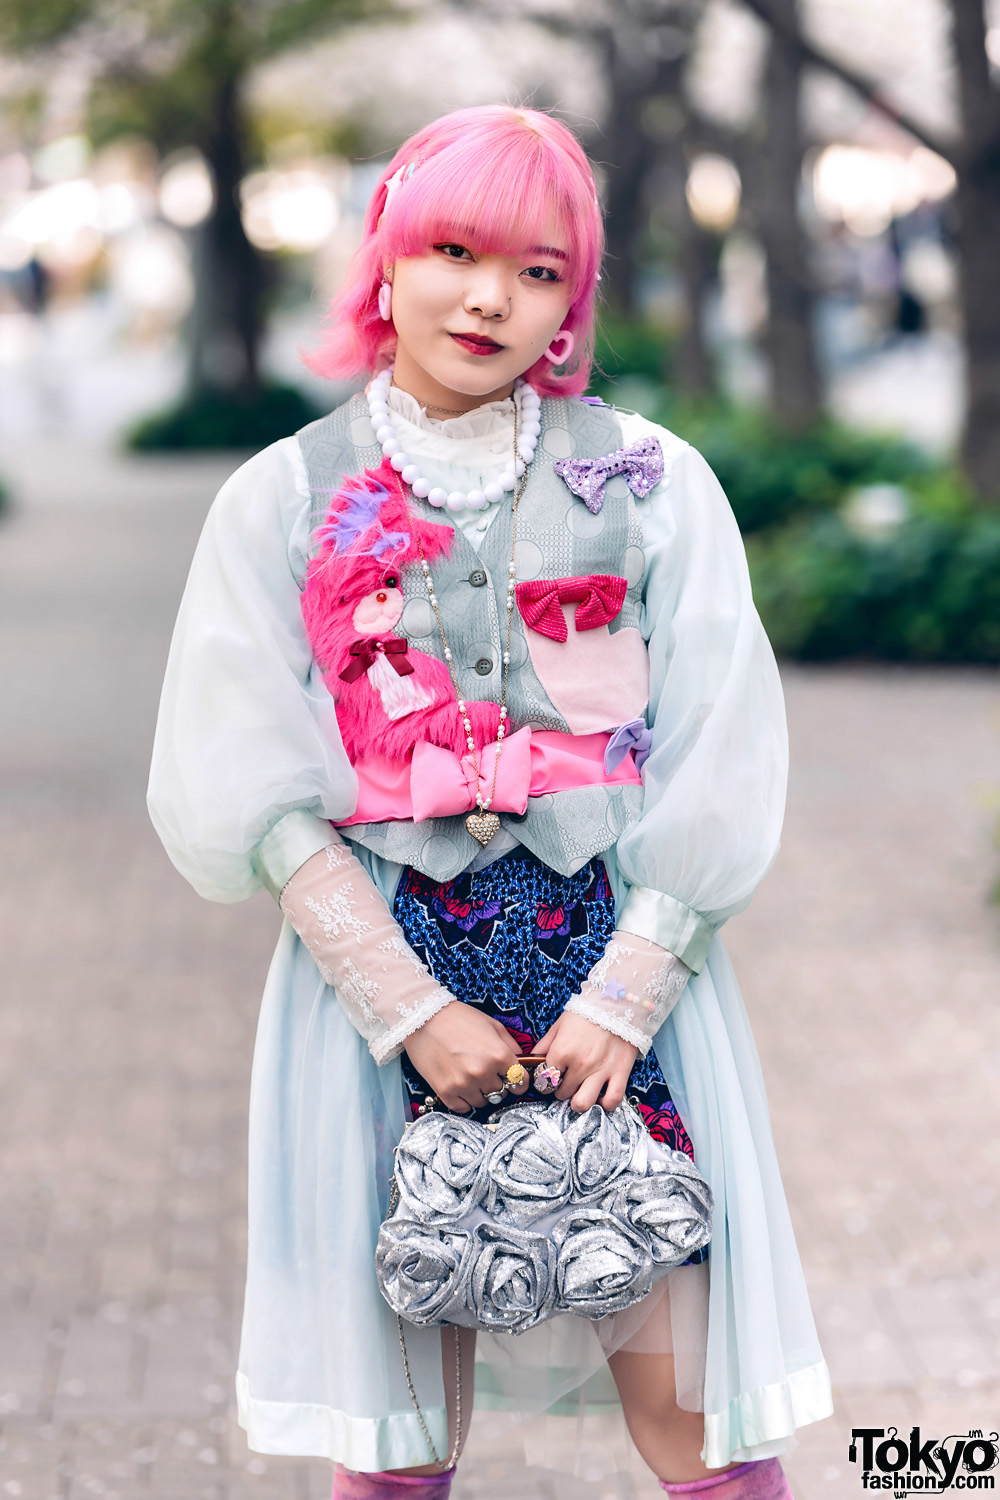 Pink & Blue Street Style in Tokyo w/ Pink Hair, Kiki2 Layered Tops ...